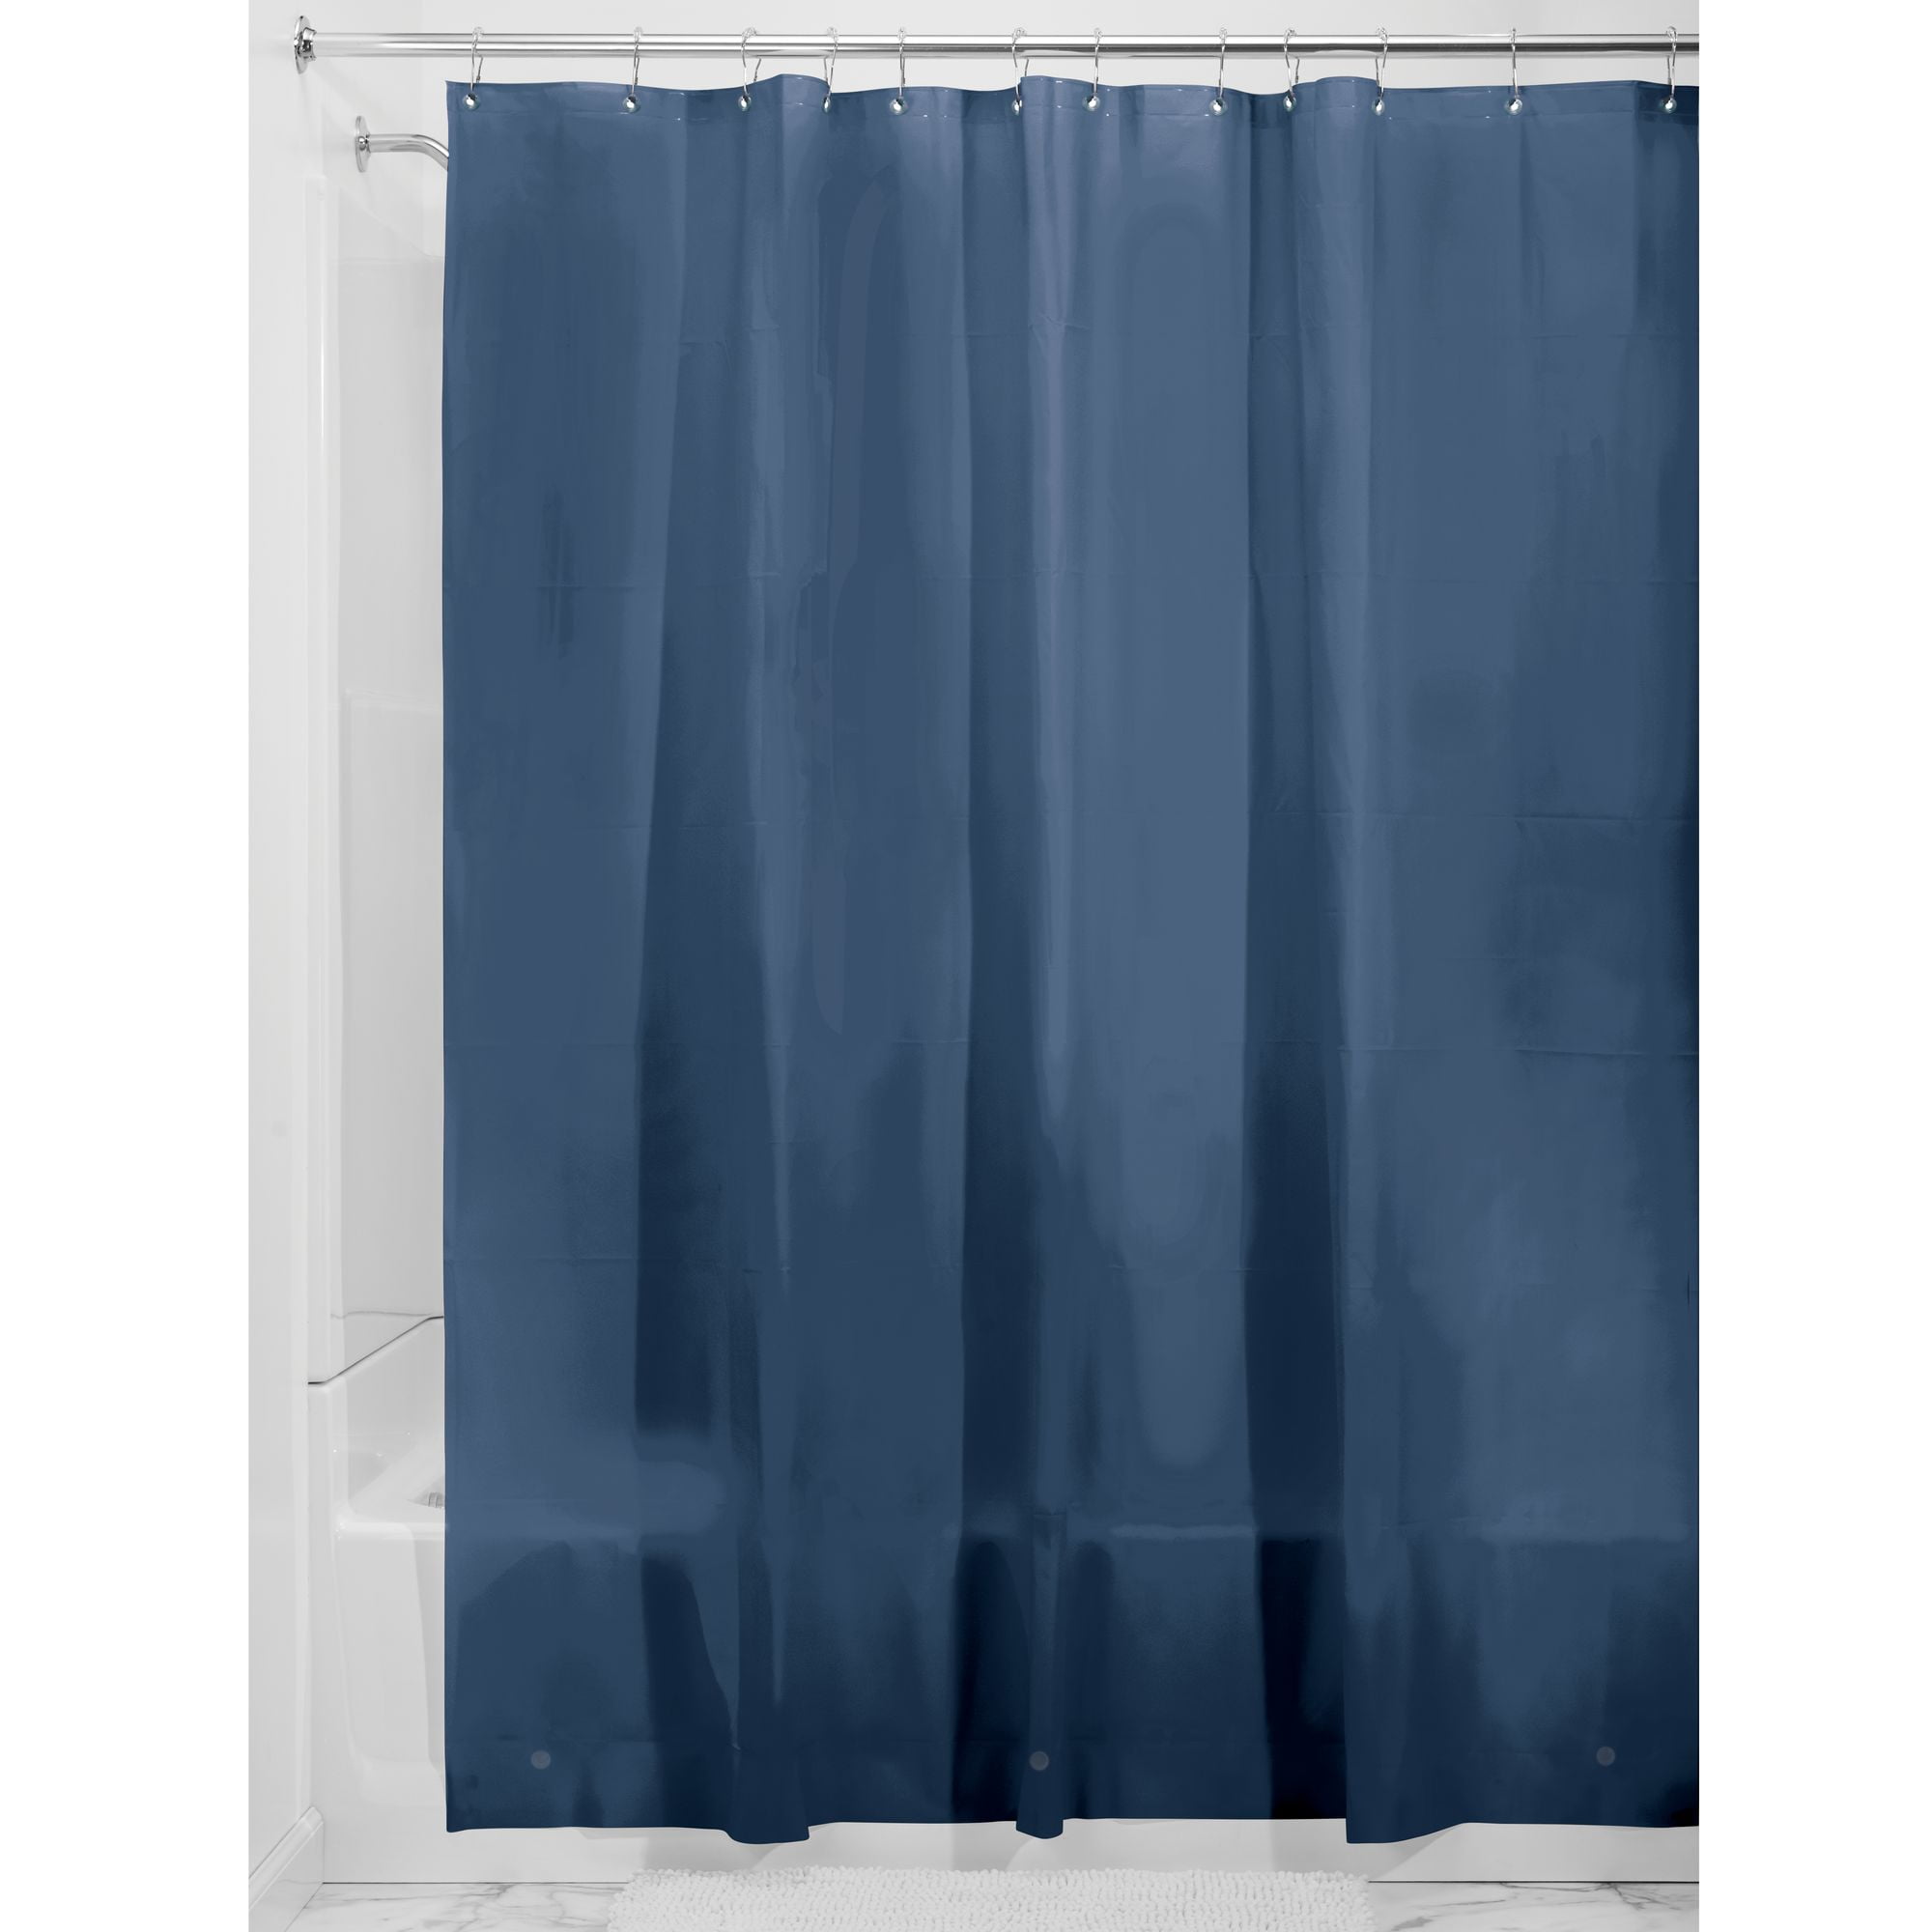 Frost Details about   InterDesign PEVA 3 Gauge Shower Curtain Liner Stall 54" x 78" 